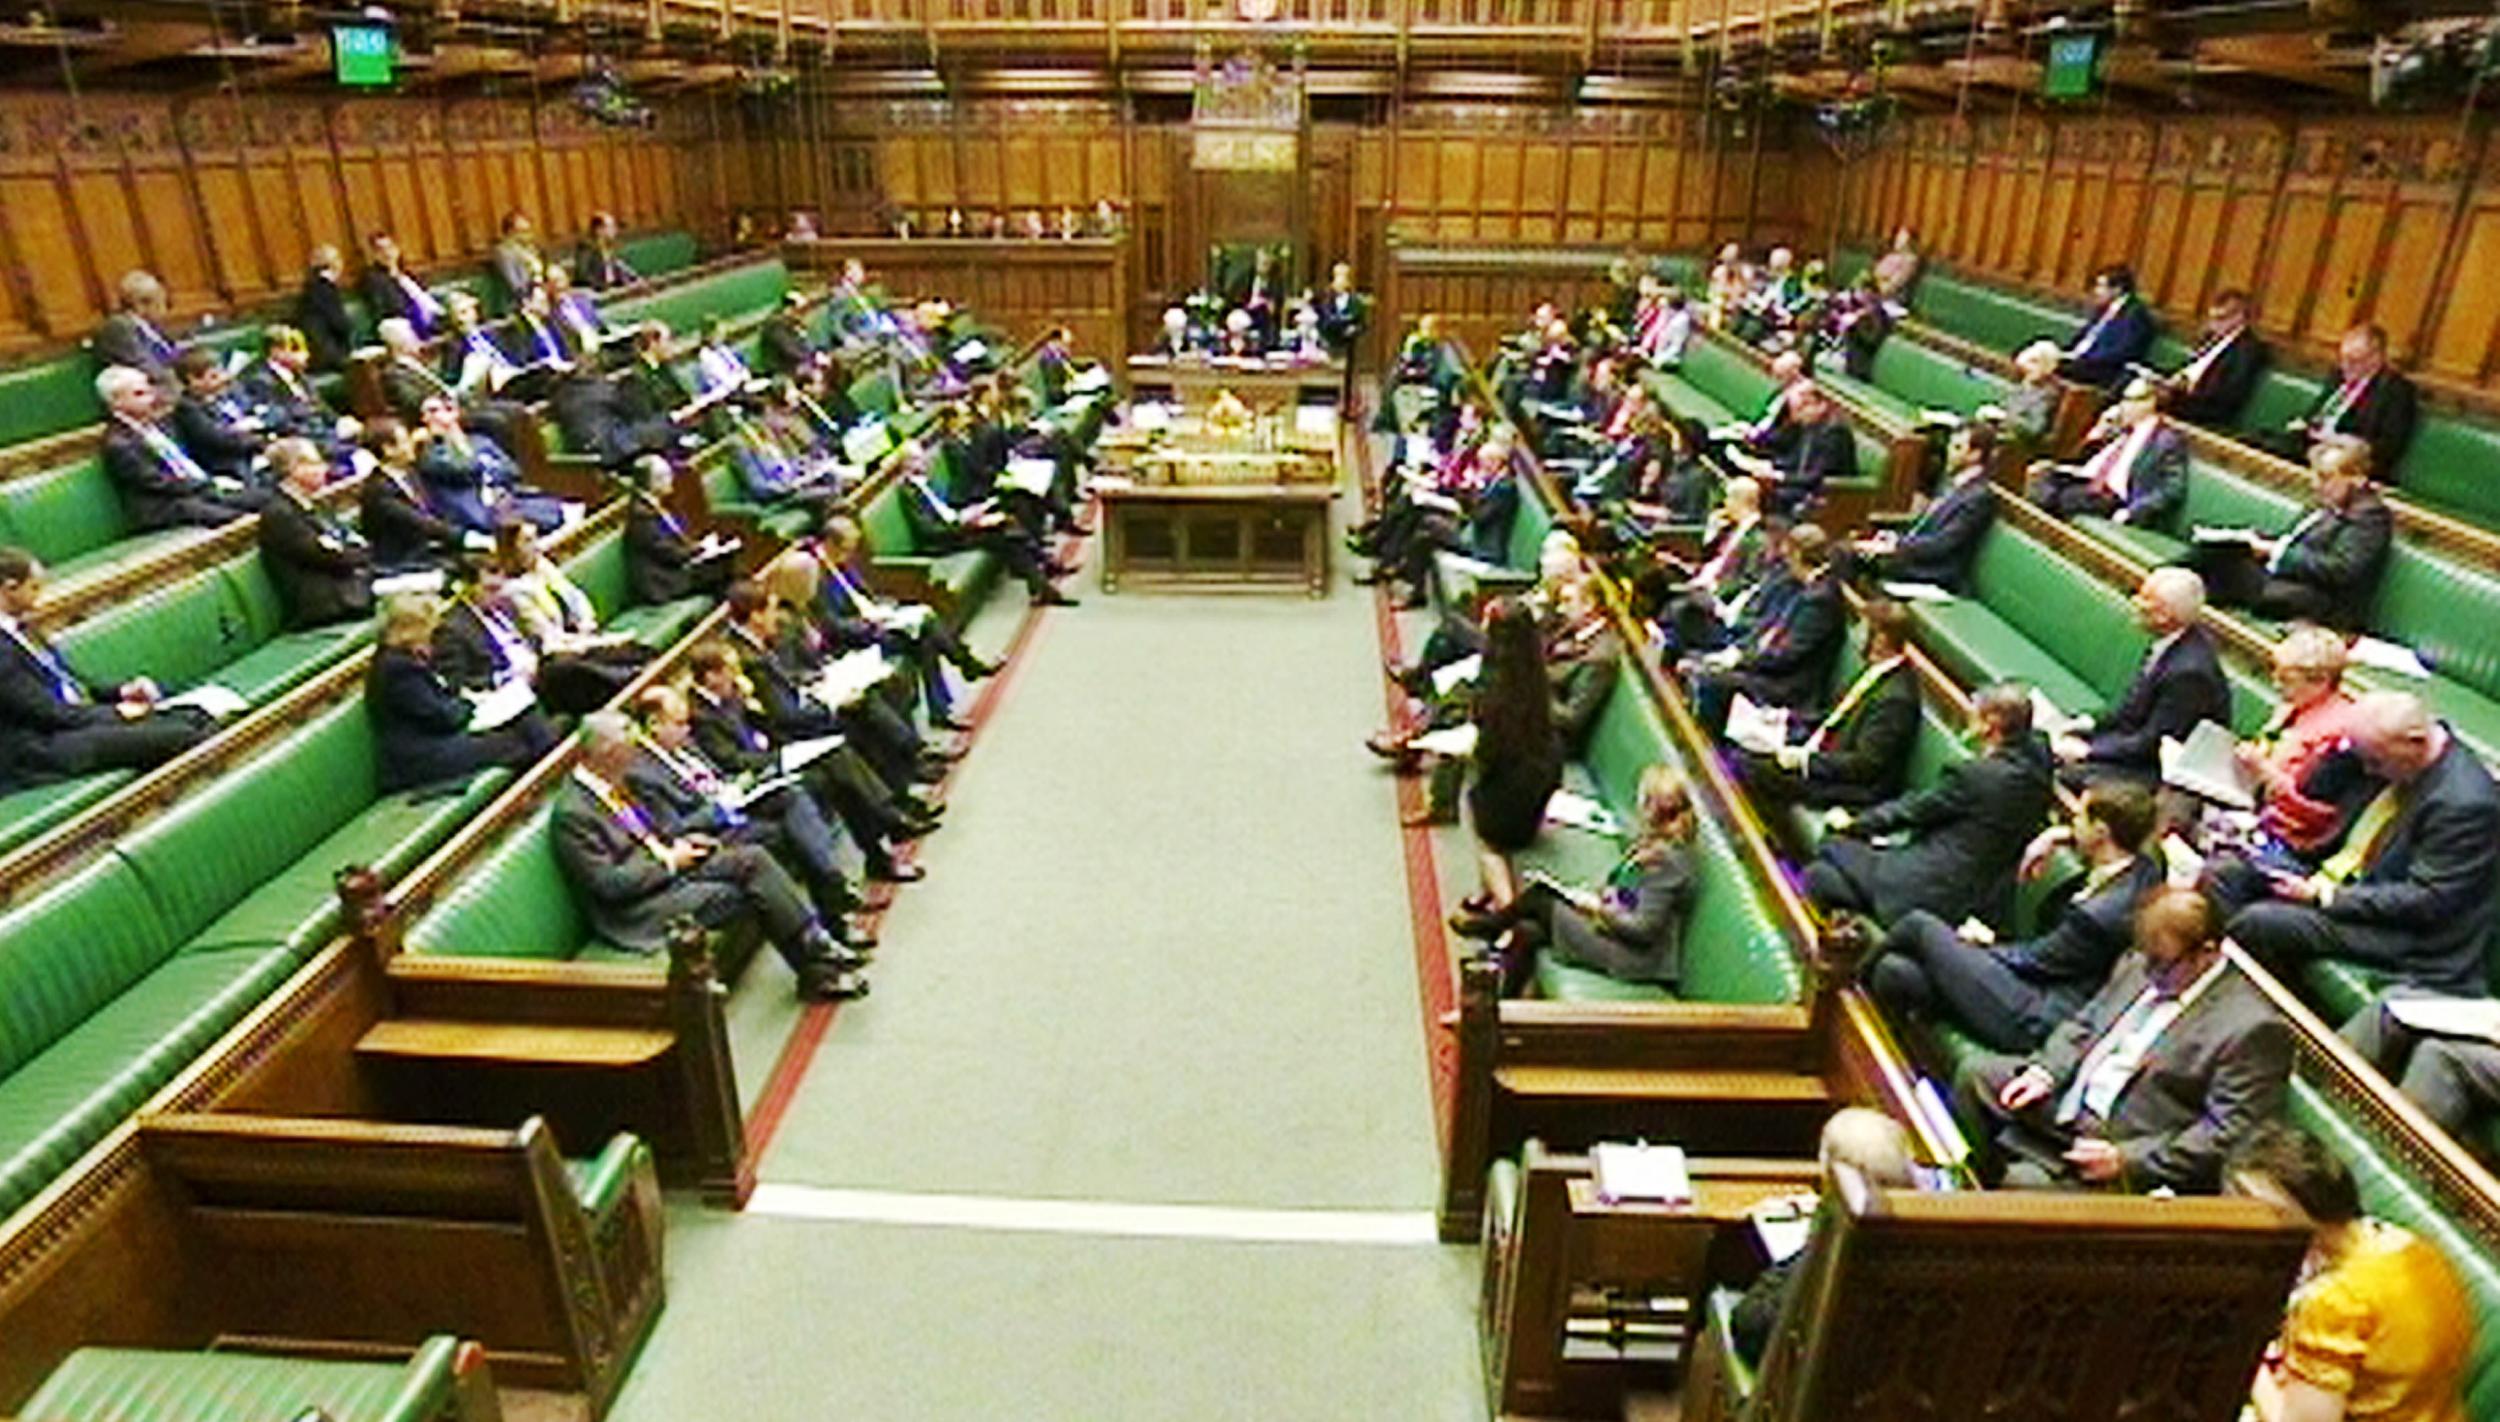 MPs debate the renewal of Trident